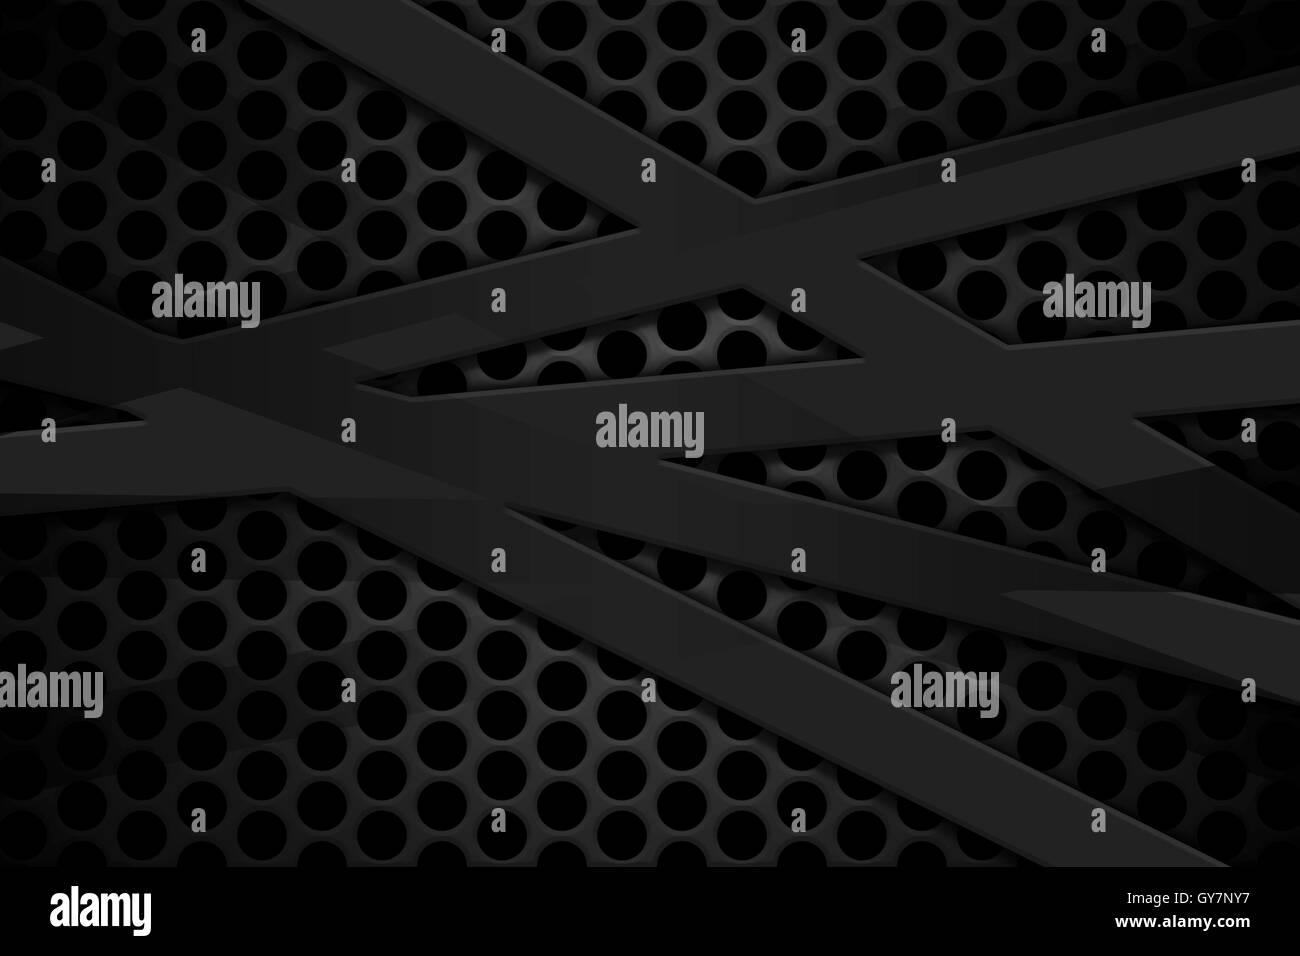 gray carbon fiber frame on black mesh carbon background. metal background and texture. 3d illustration material design. Stock Photo